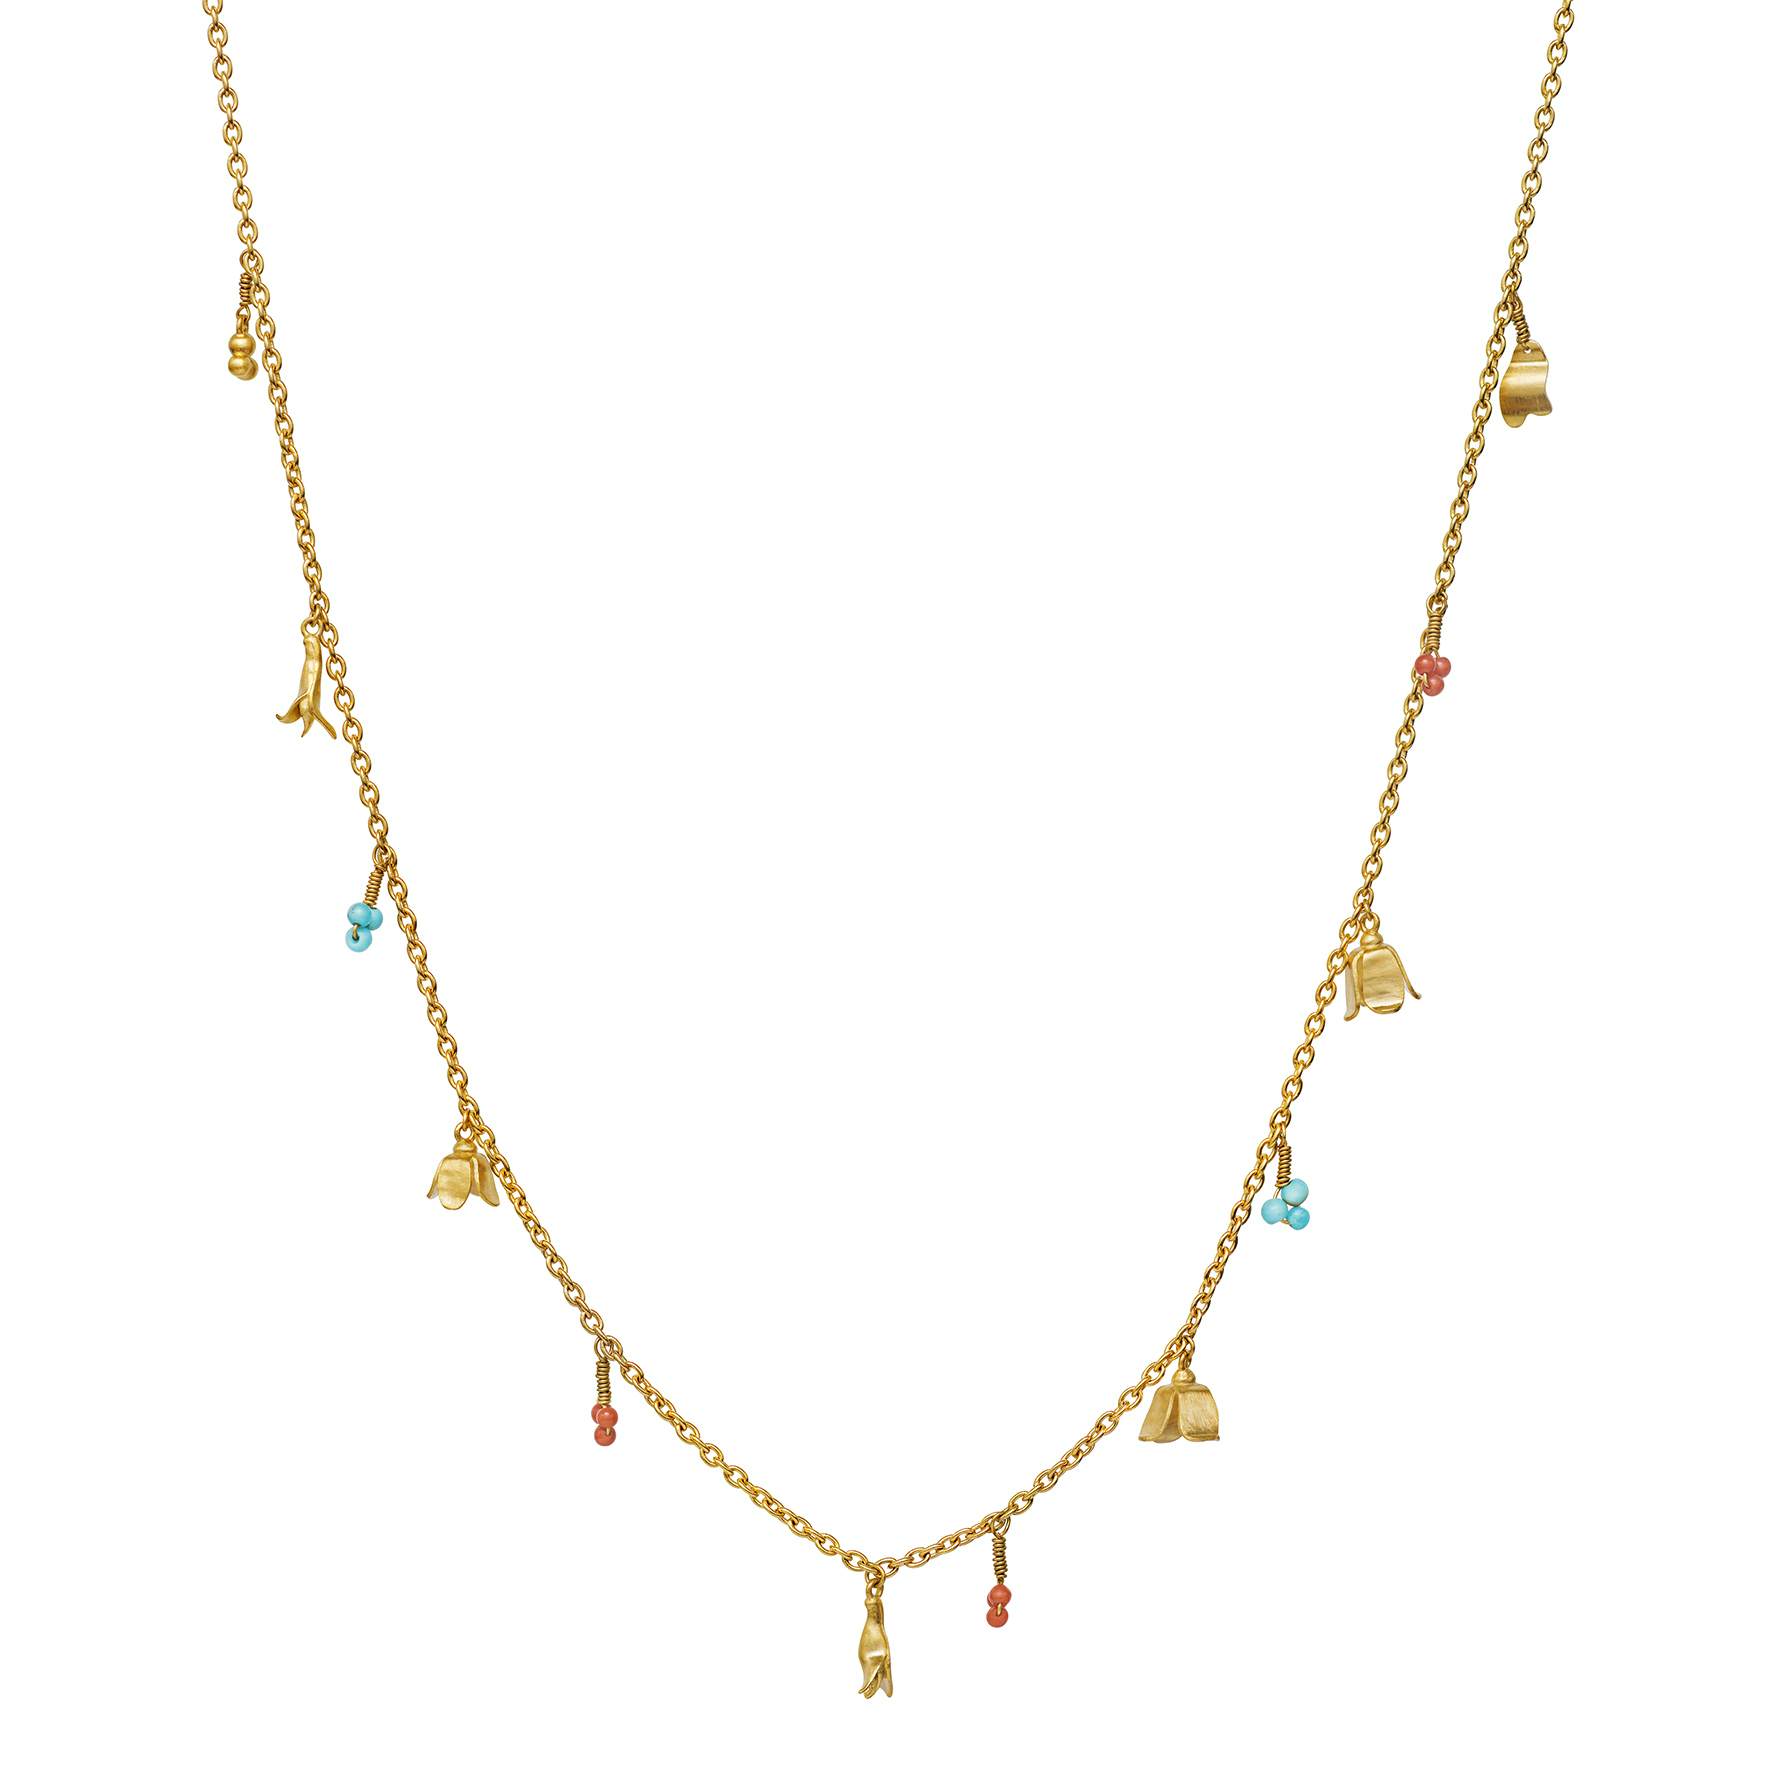 Bluebell Necklace von Maanesten in Vergoldet-Silber Sterling 925| Turquoise,Coral